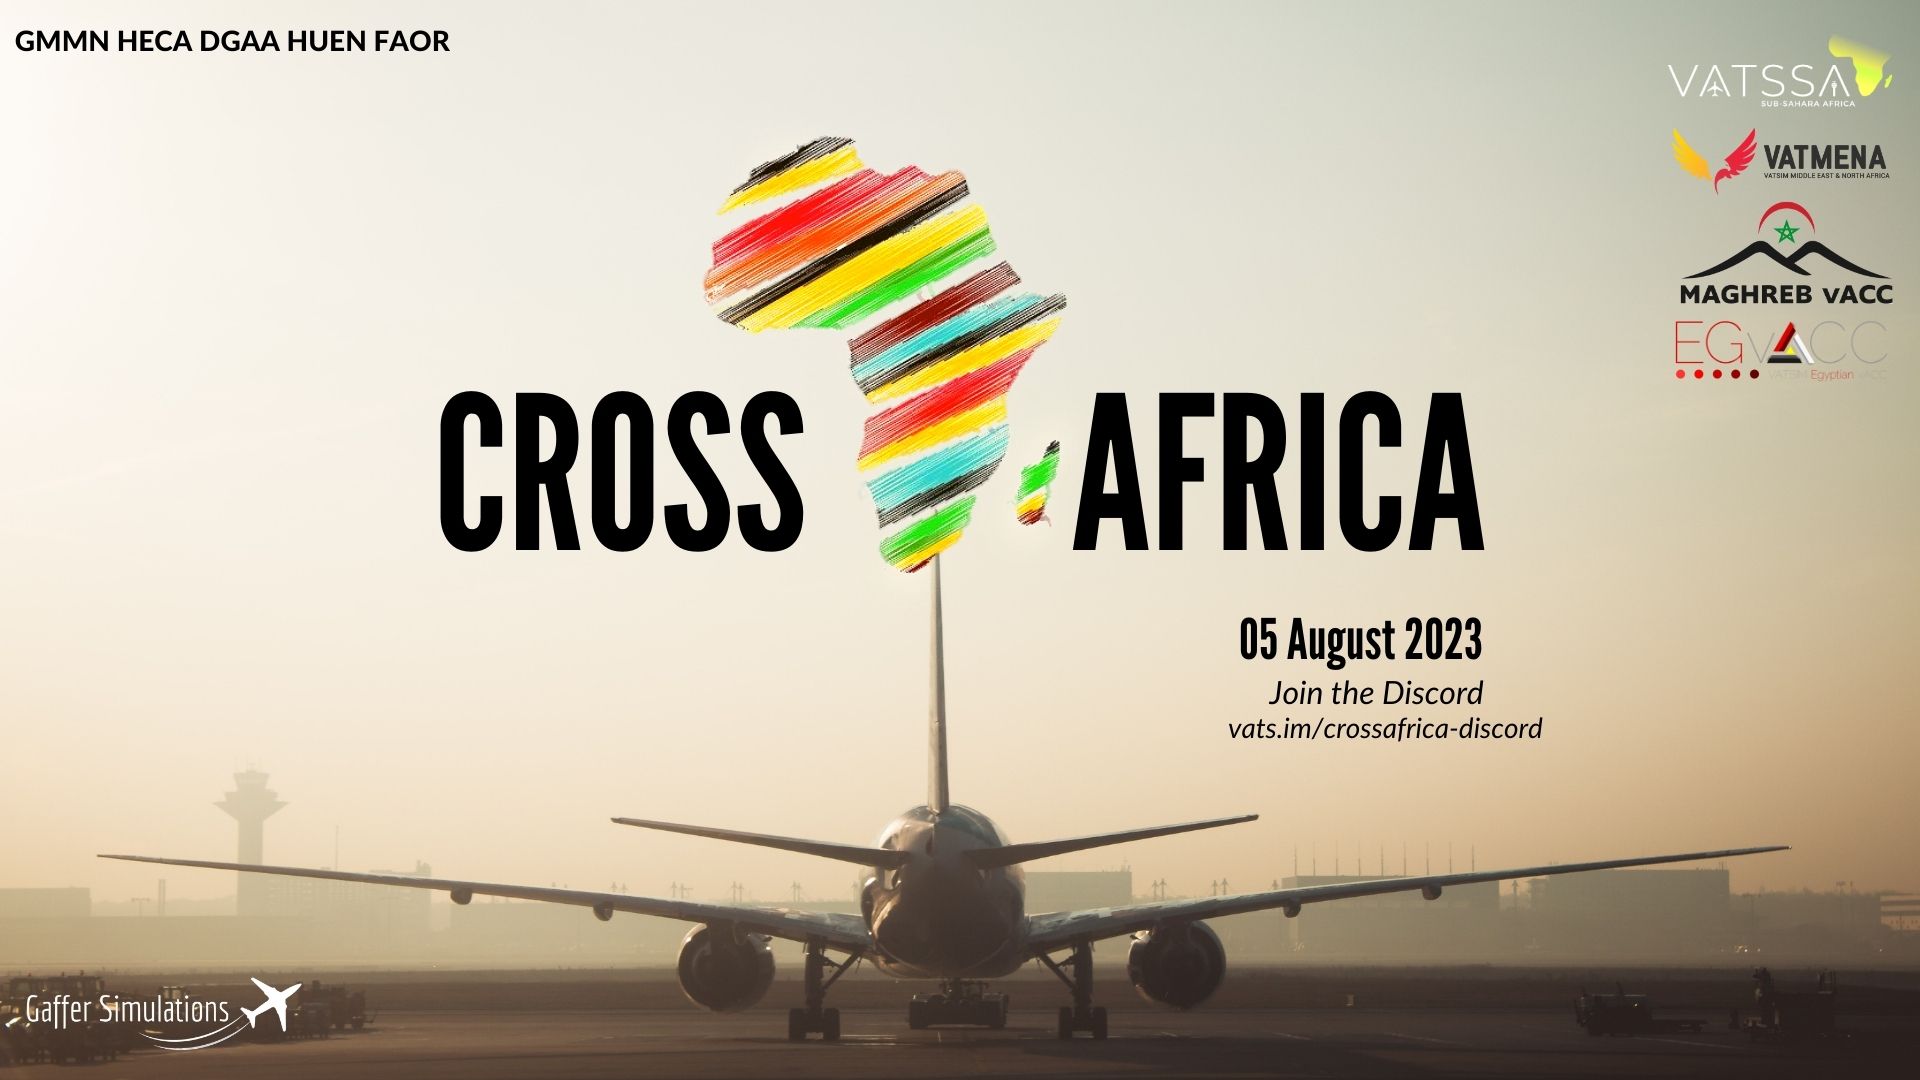 VATSIM's Cross Africa Event Returns